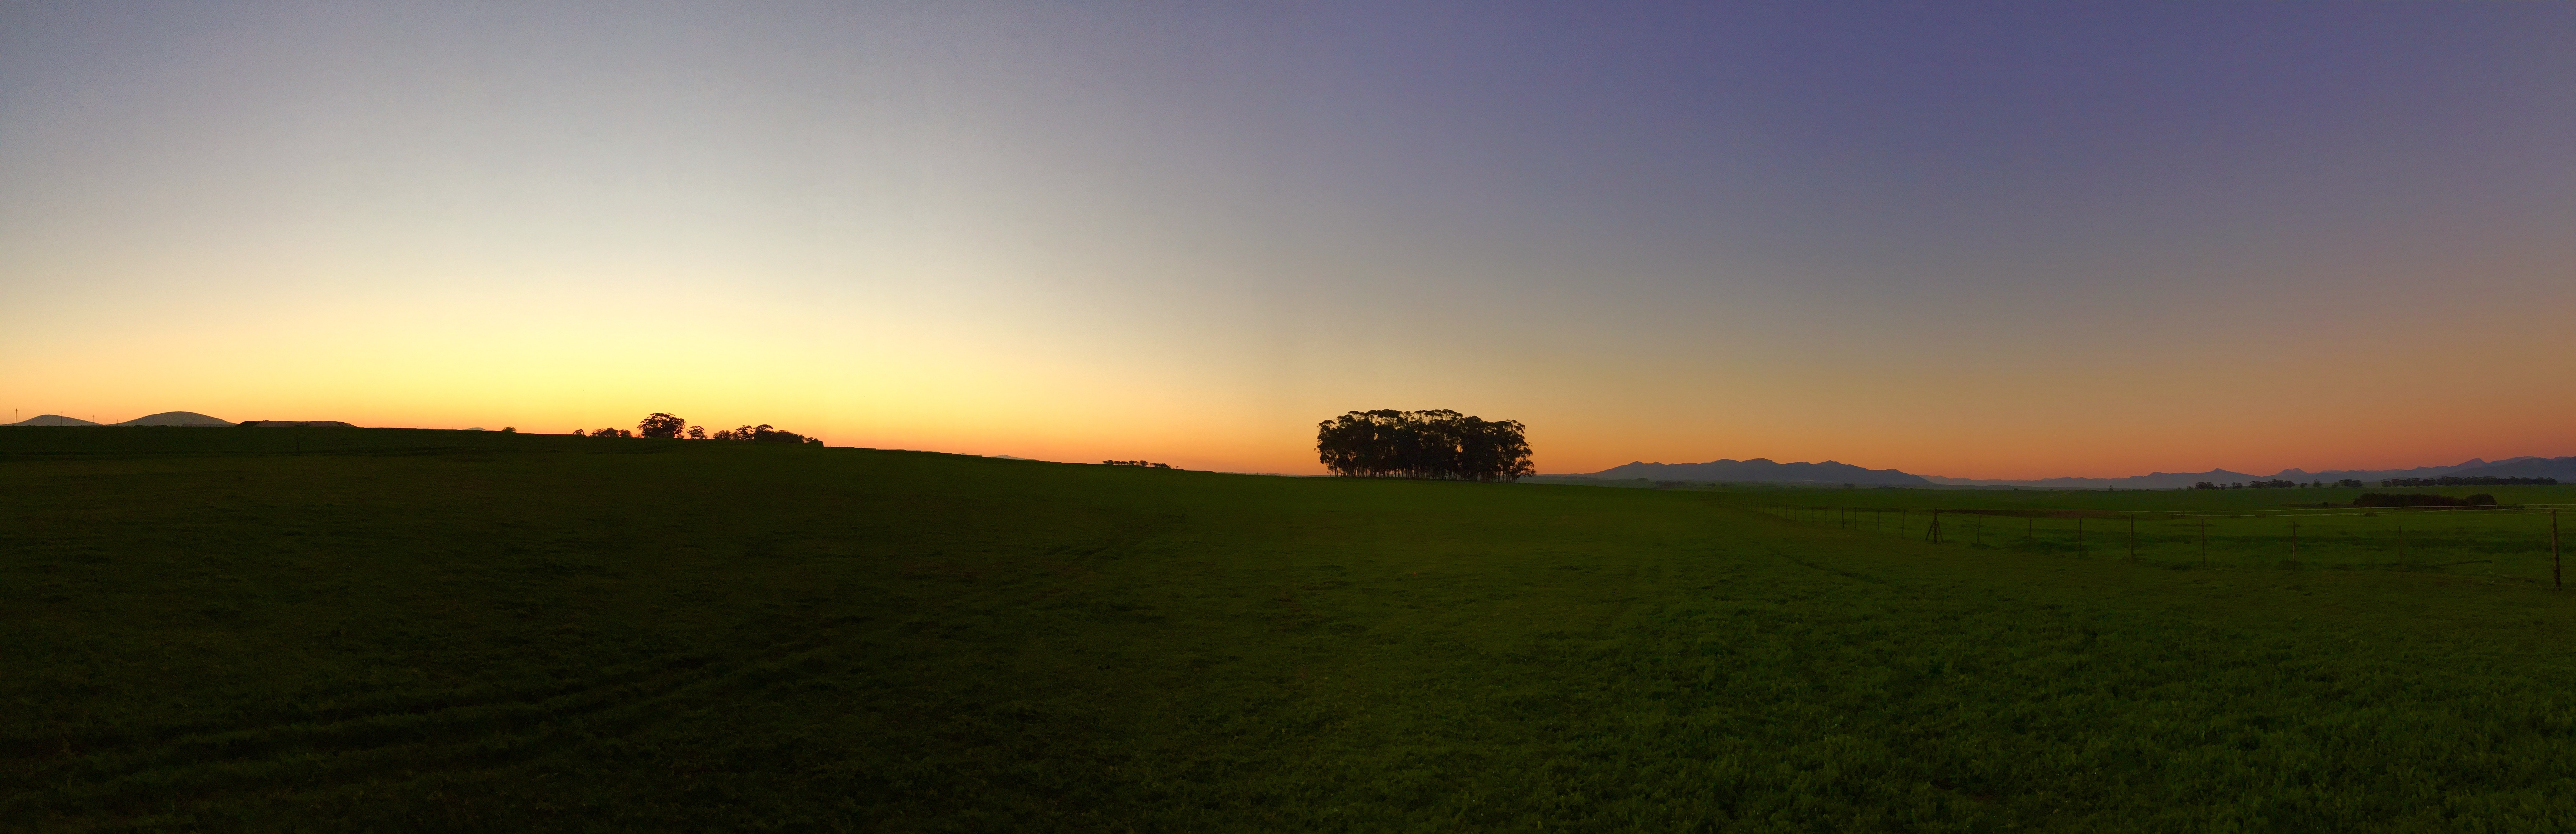 Sunrise on green grass field photo